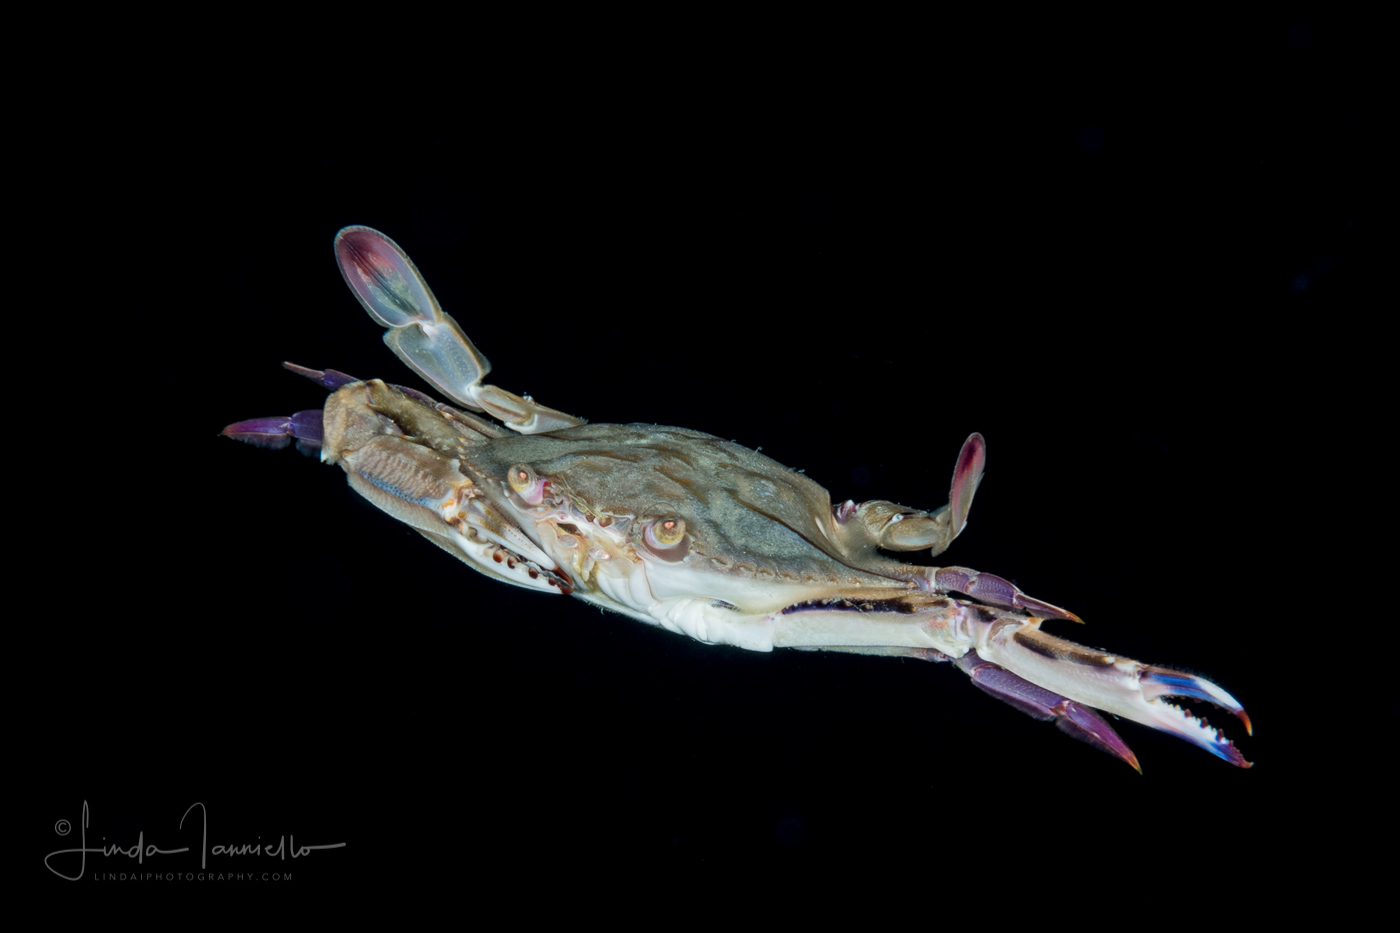 Iridescent Swimming Crab - Portunidae Family - Achelous gibbesii or Portunus gibbesii